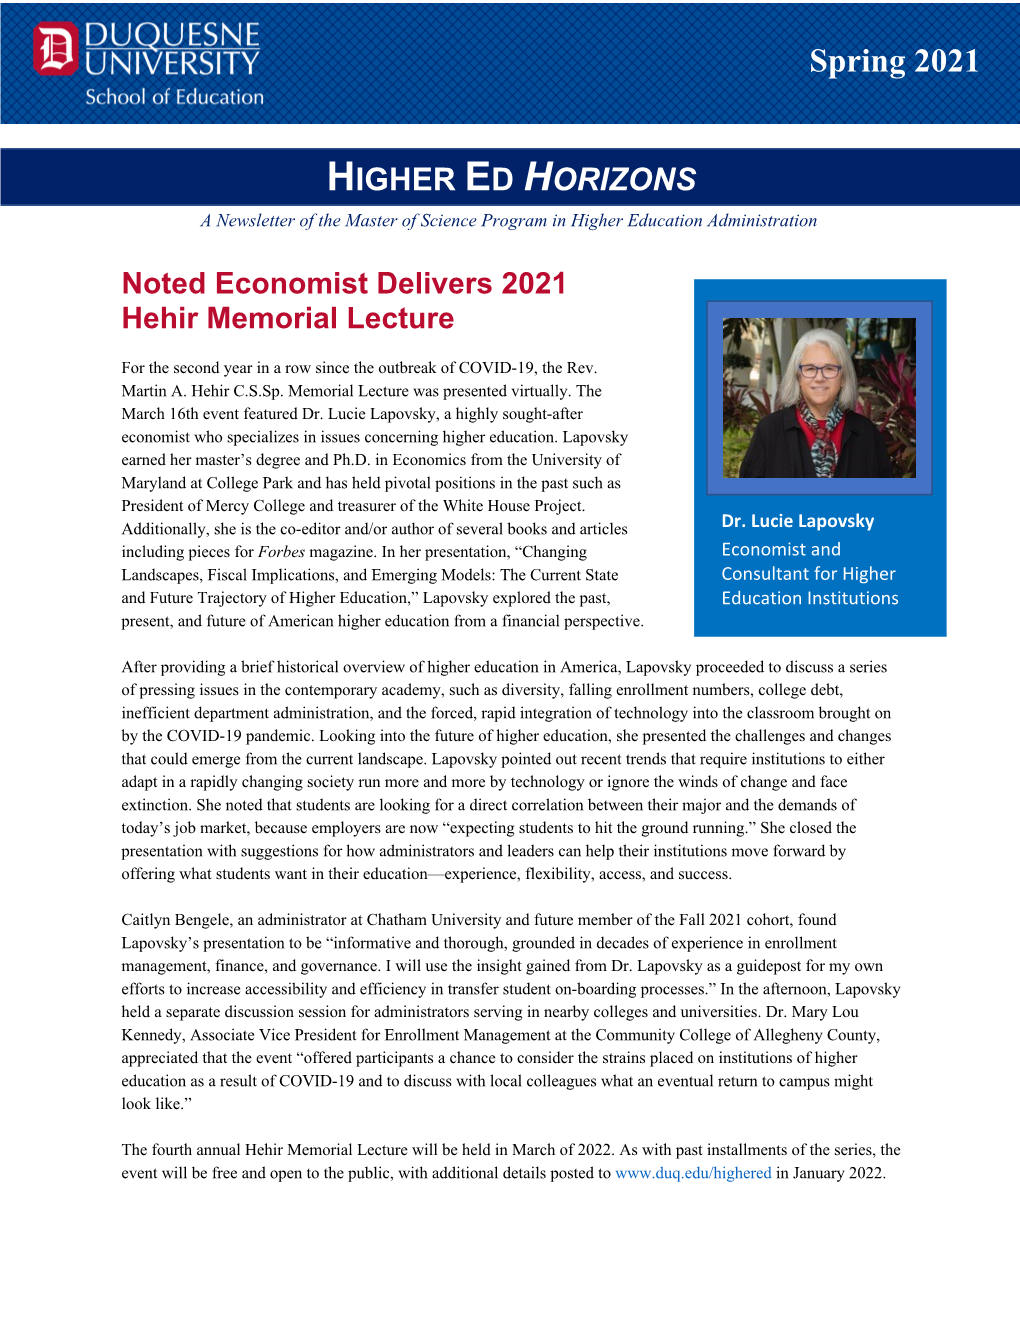 Higher Ed Horizons Spring 2021 FINAL